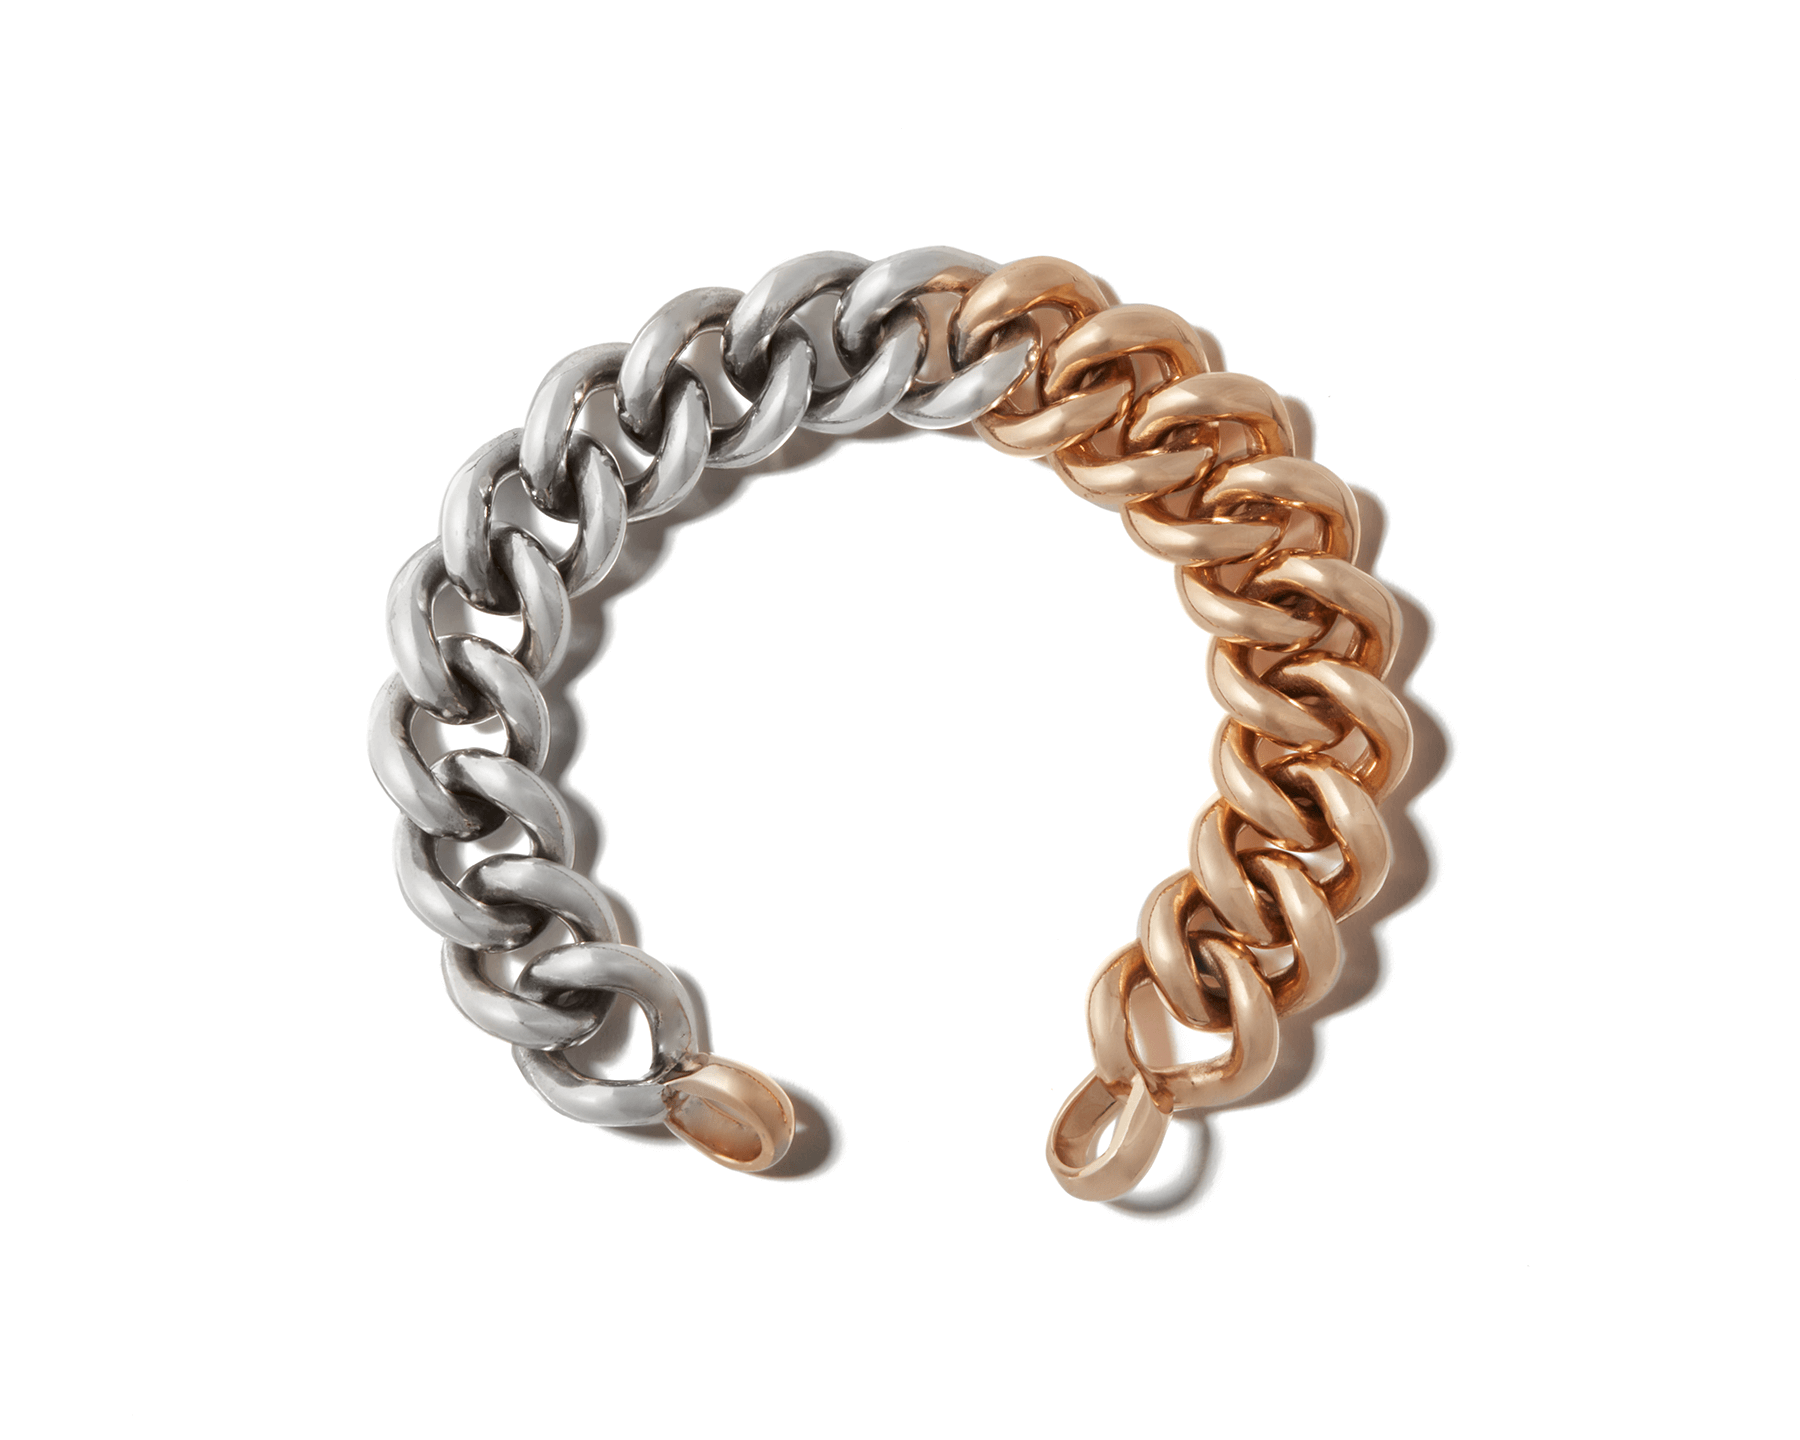 Curb Chain Bracelet - A